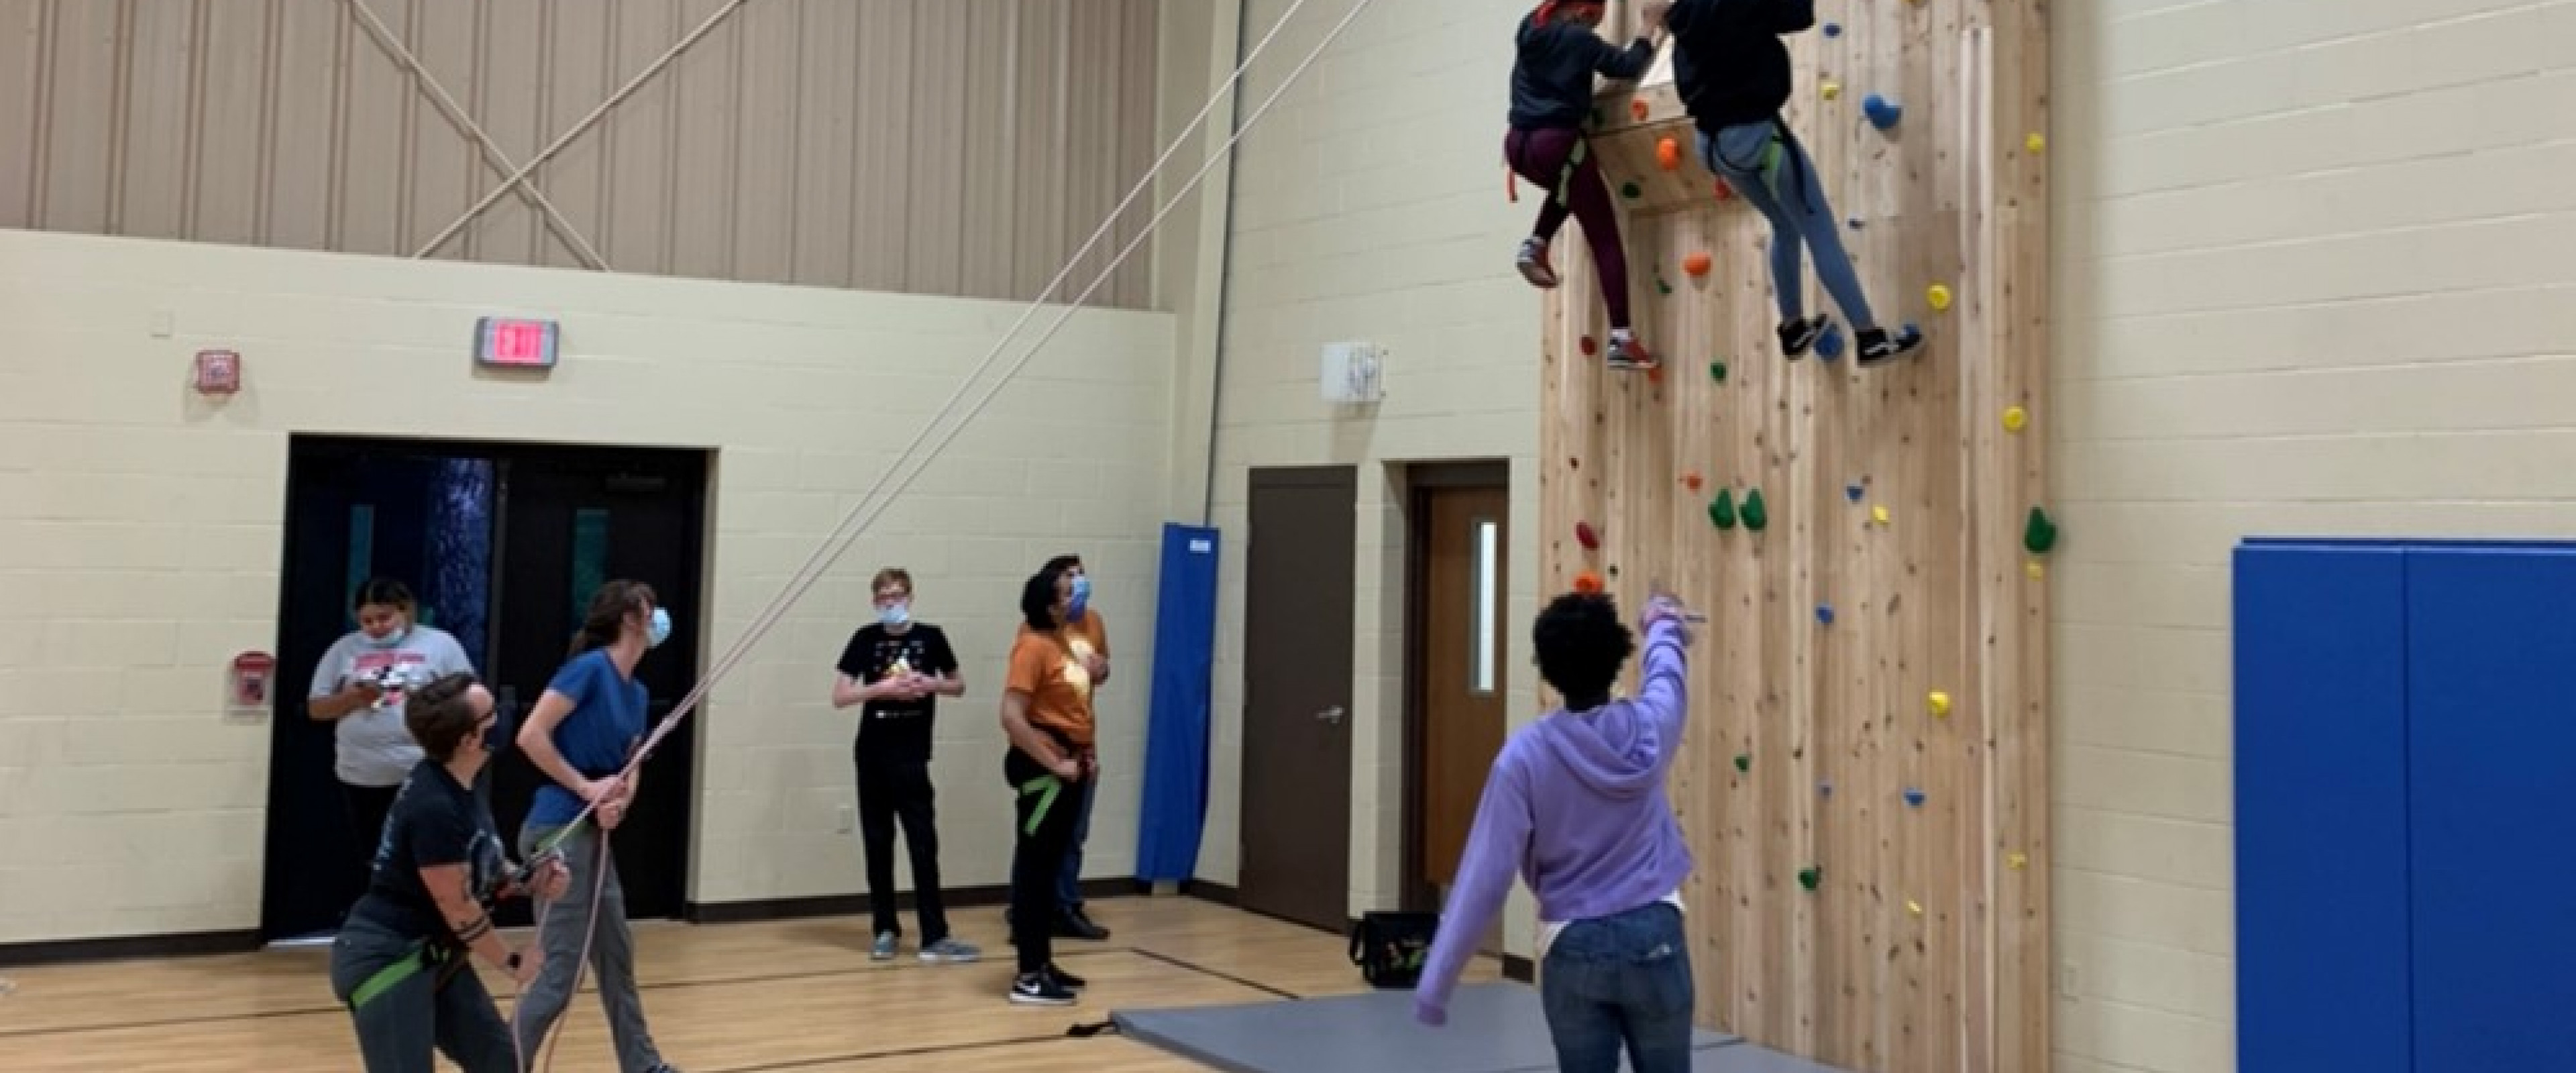 students climbing an indoor wall